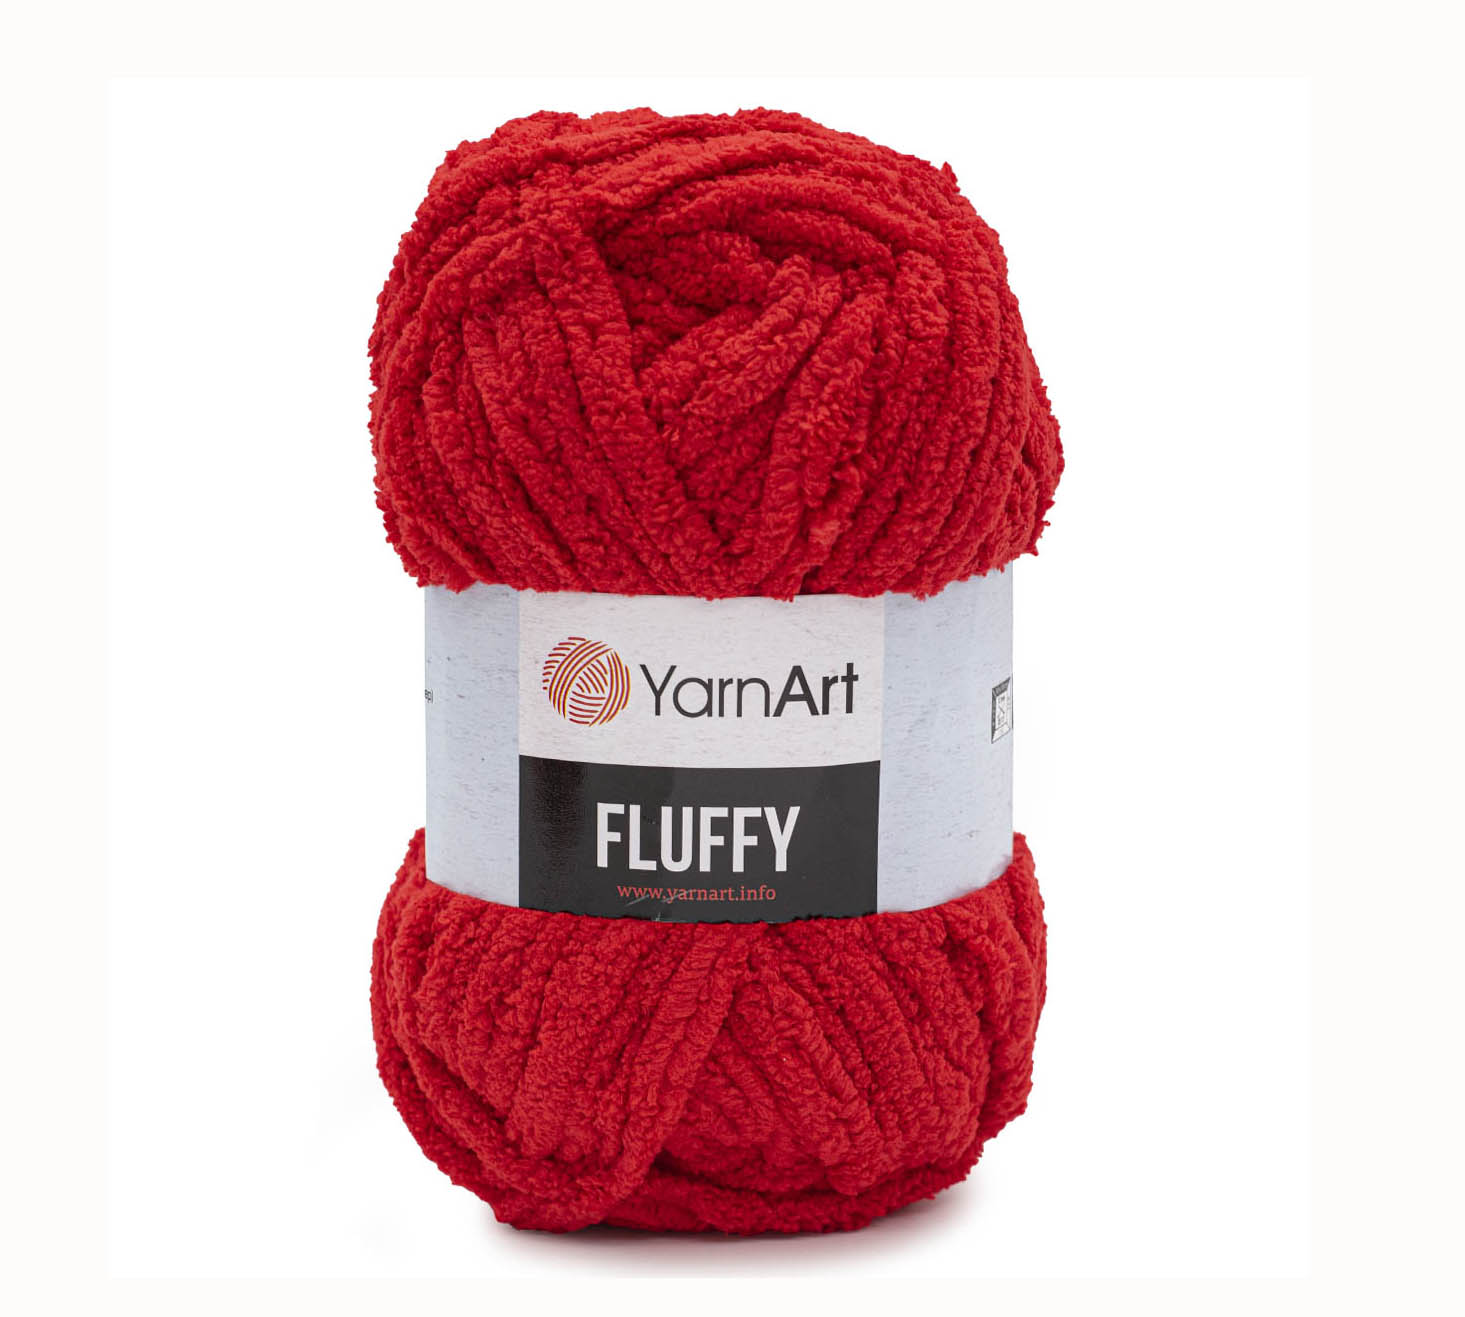 YarnArt Fluffy 723 